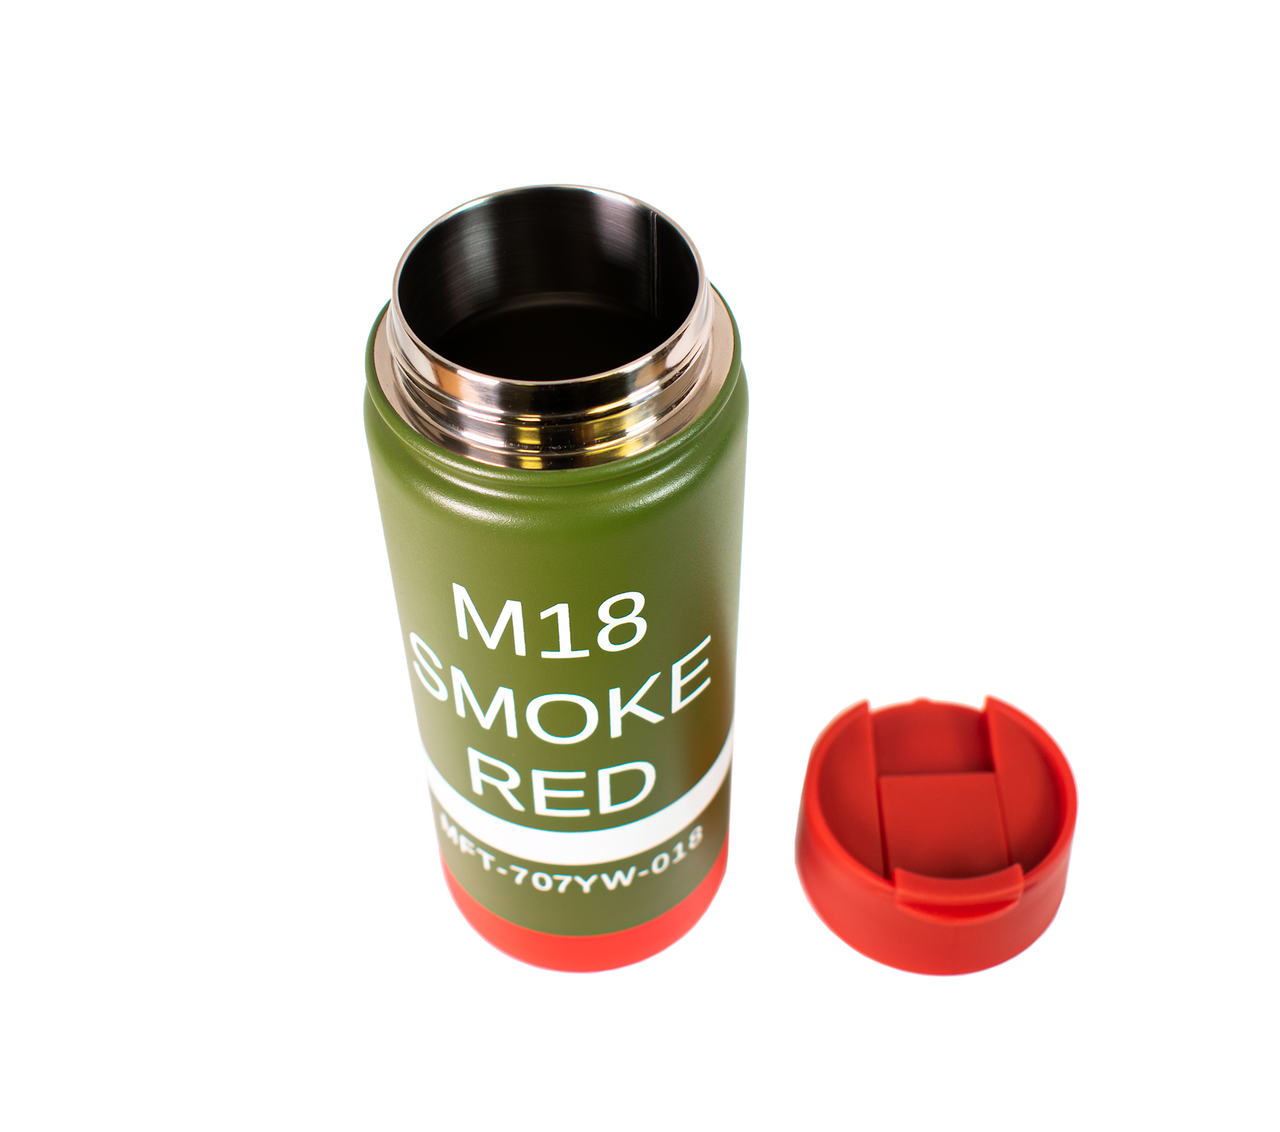 m18 colored smoke grenade